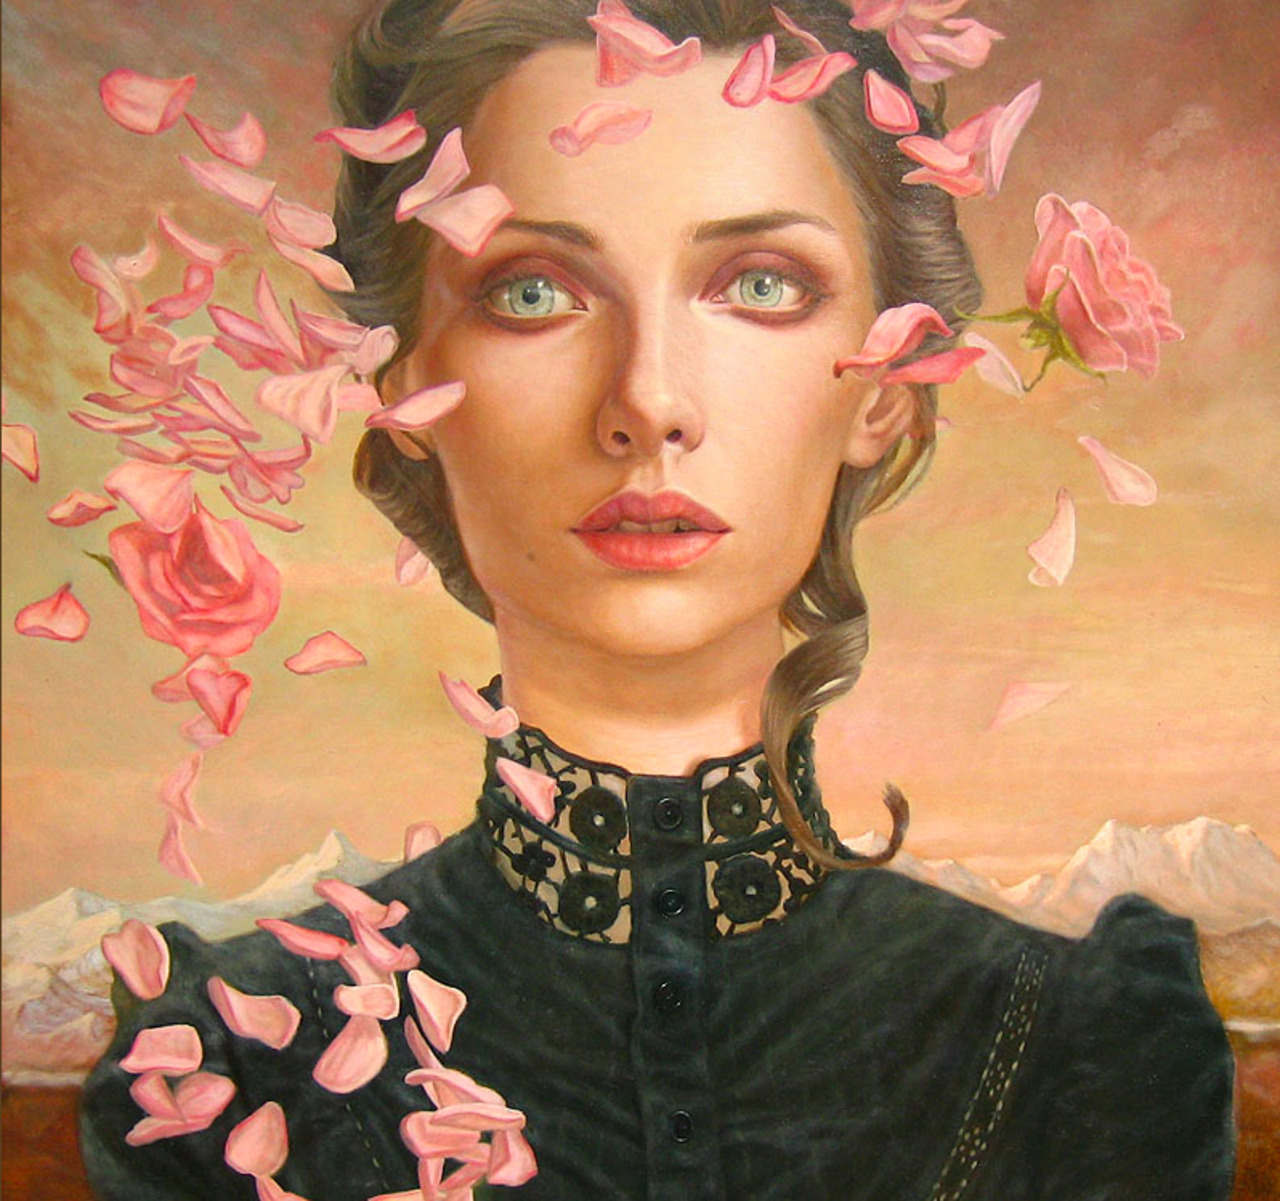 #Painting by Kris Lewis #art #portrait #flowers 
http://www.krislewisart.com/images/scintillatingvenuses.html http://t.co/IvRPli4ICq